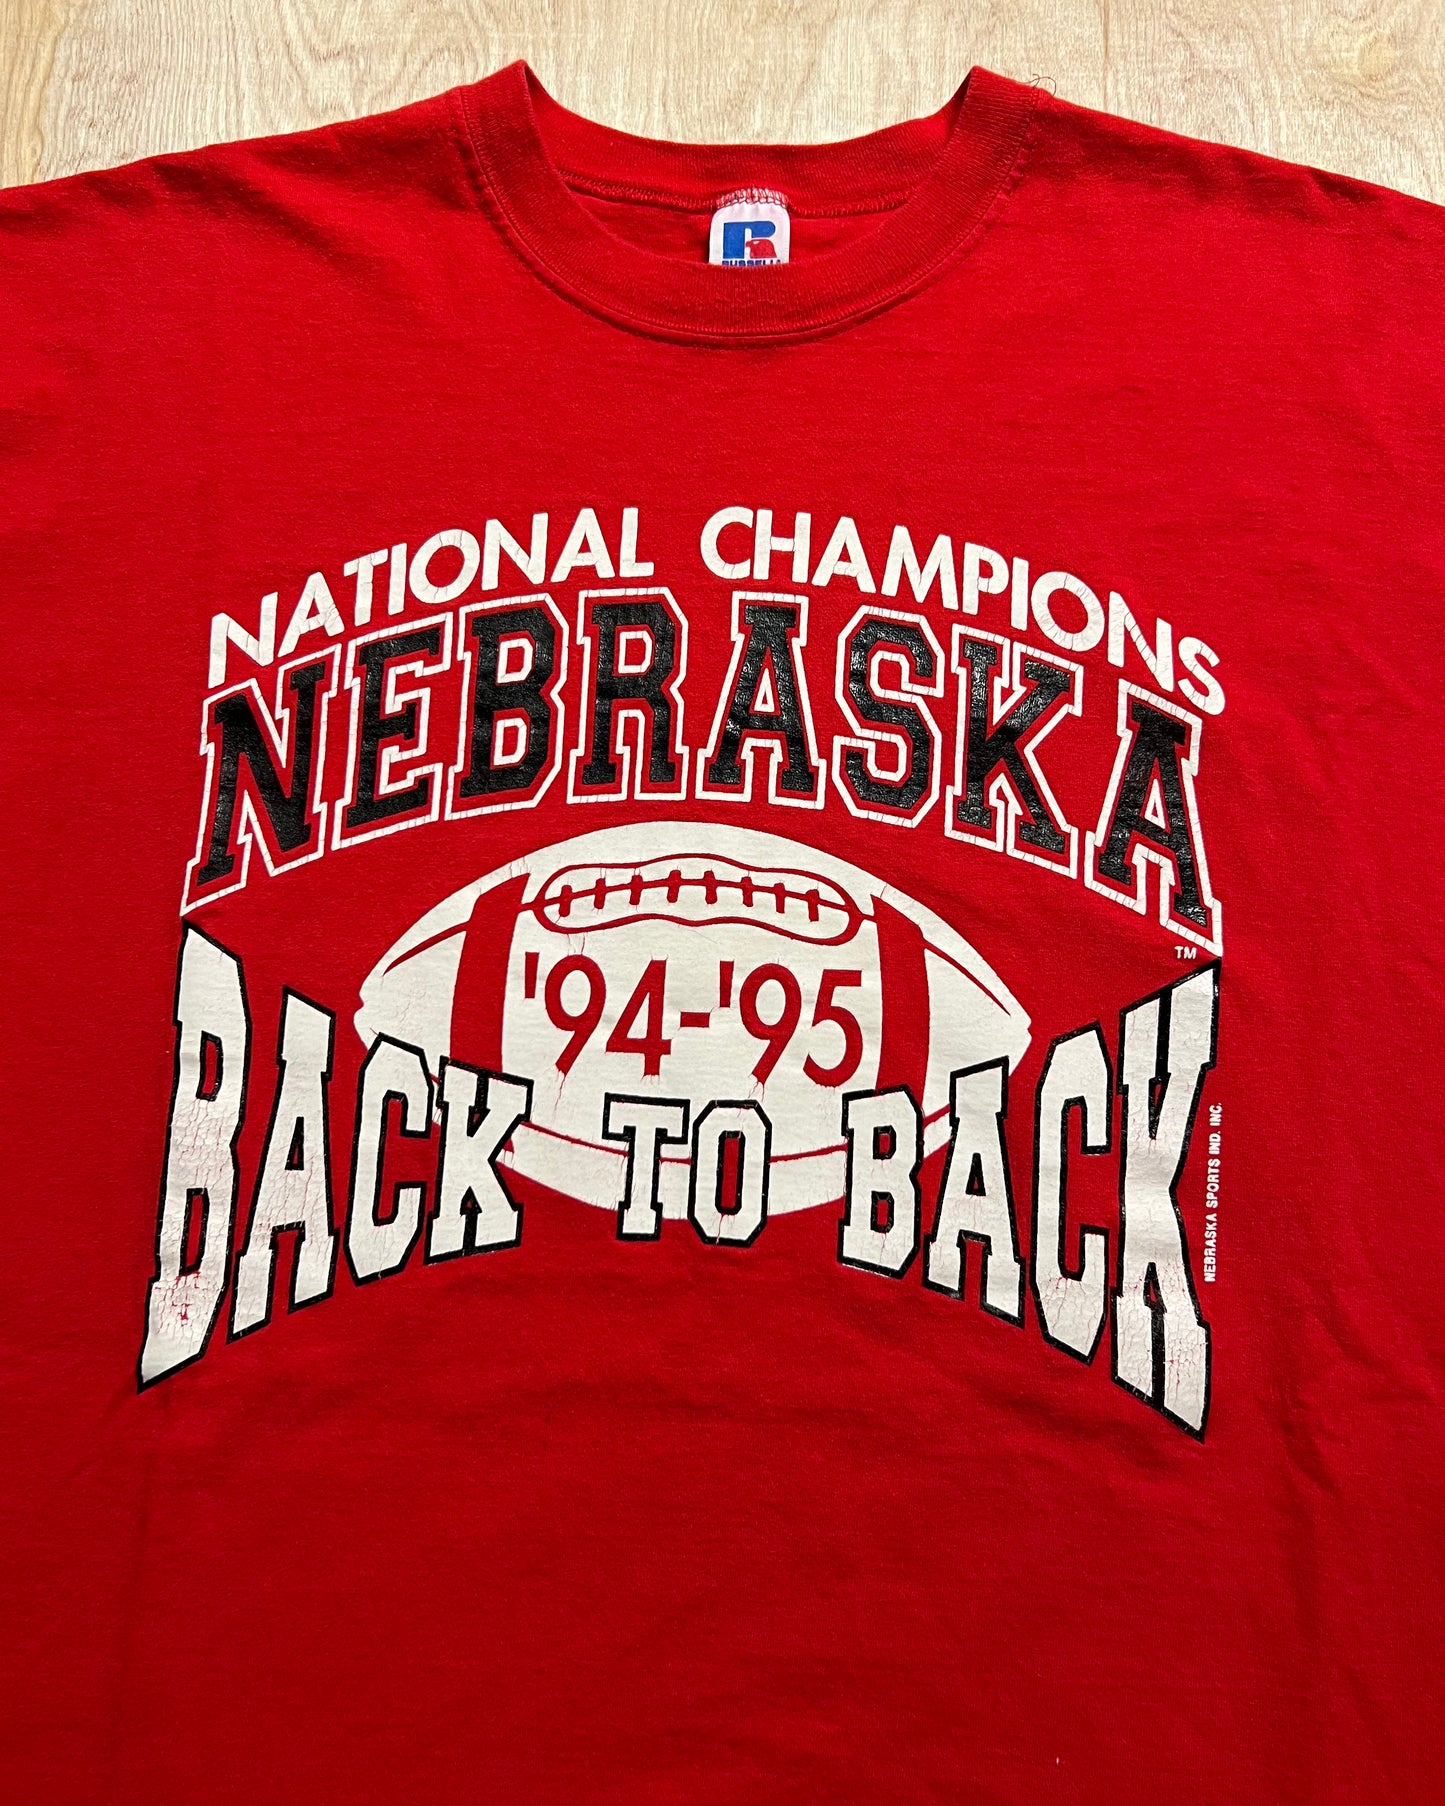 1994-95 Nebraska Football Back to Back National Champions T-Shirt